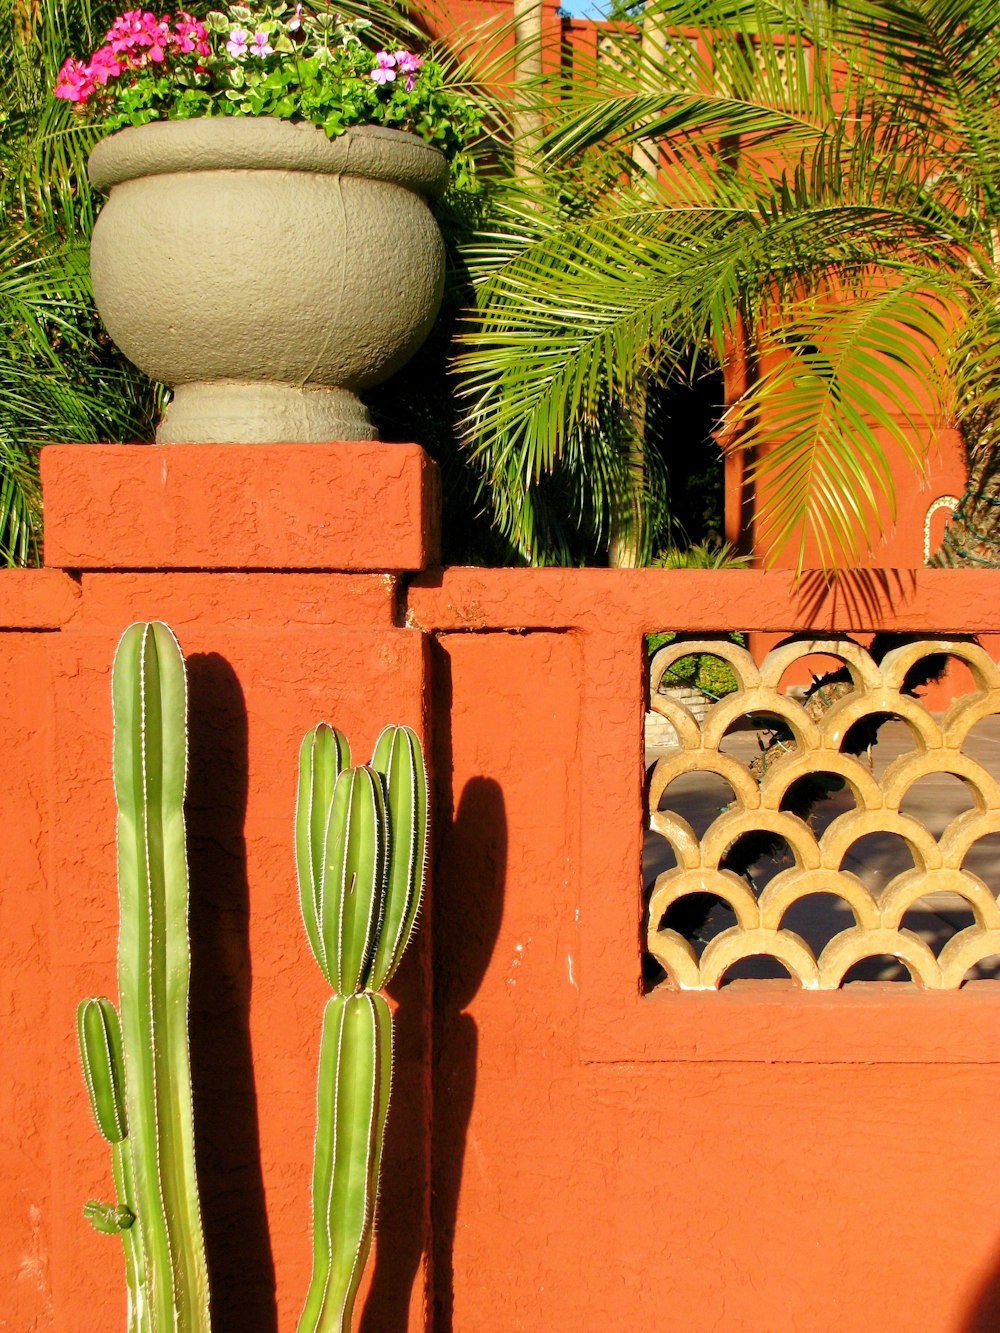 green cactus on brown concrete pot